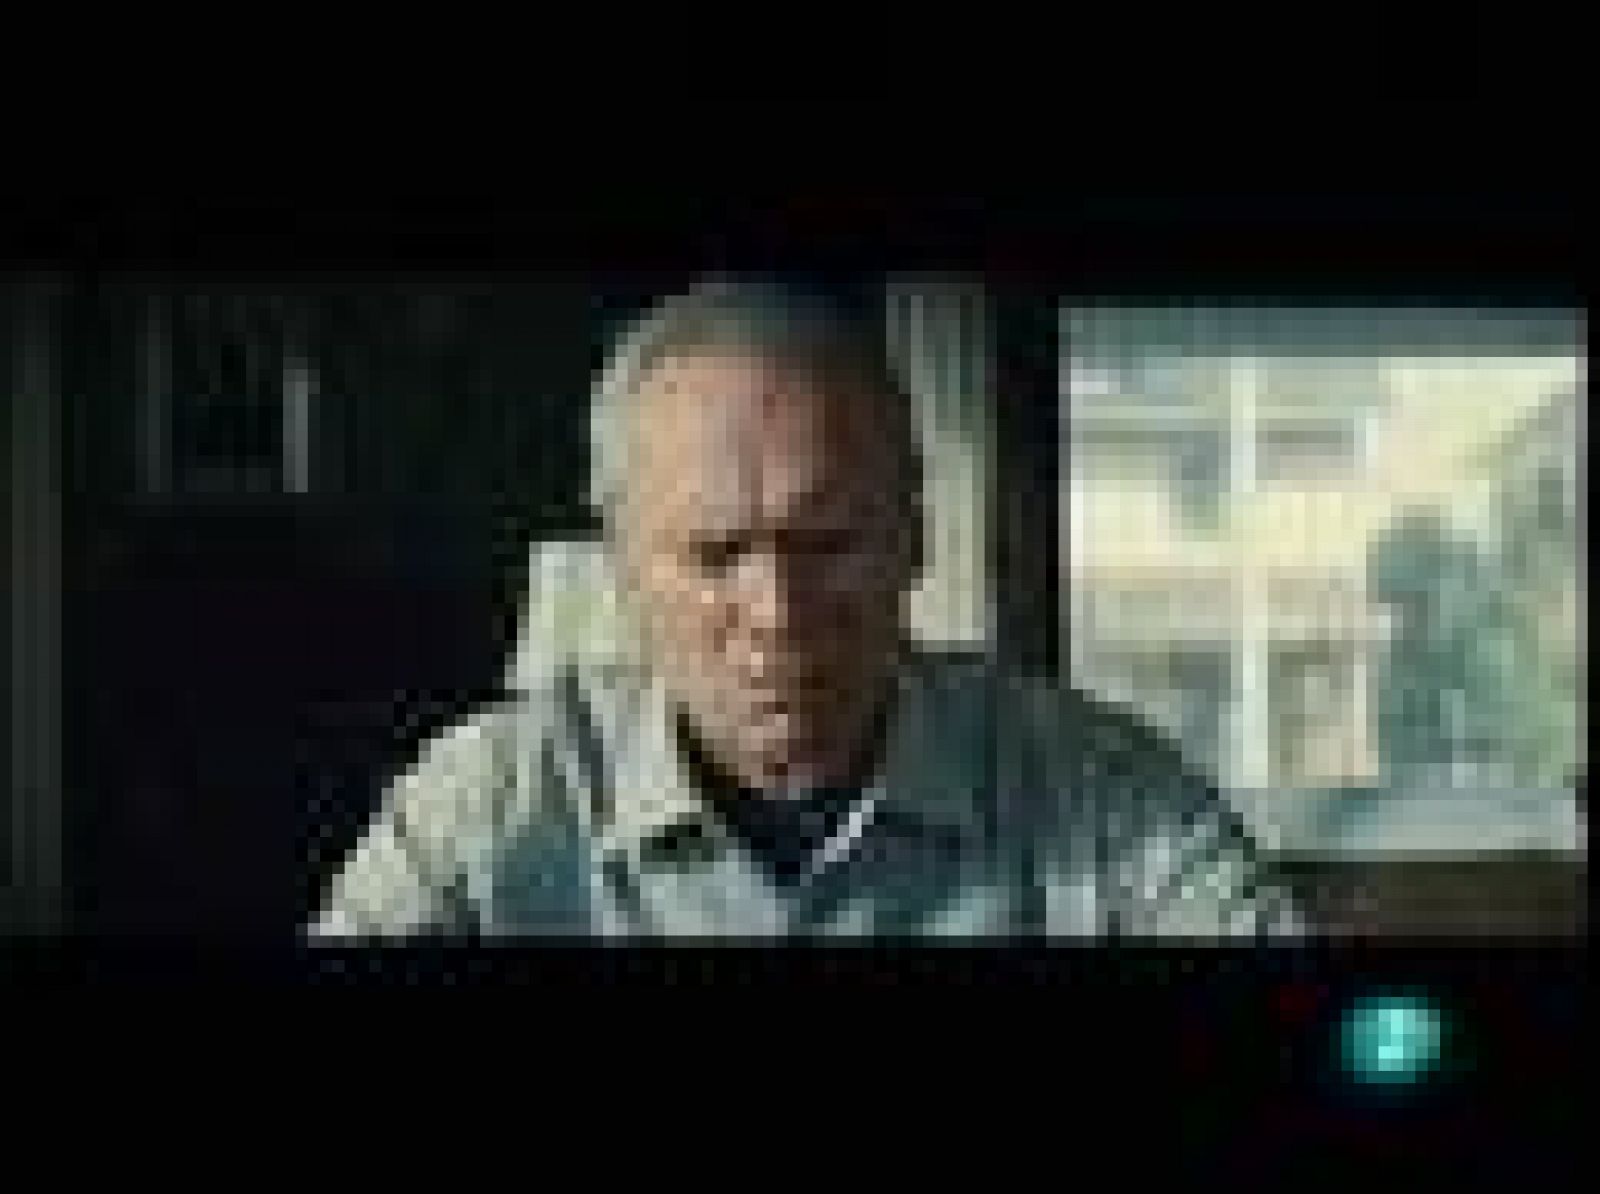   Días de cine: Clint Eastwood
5-Marzo-2009